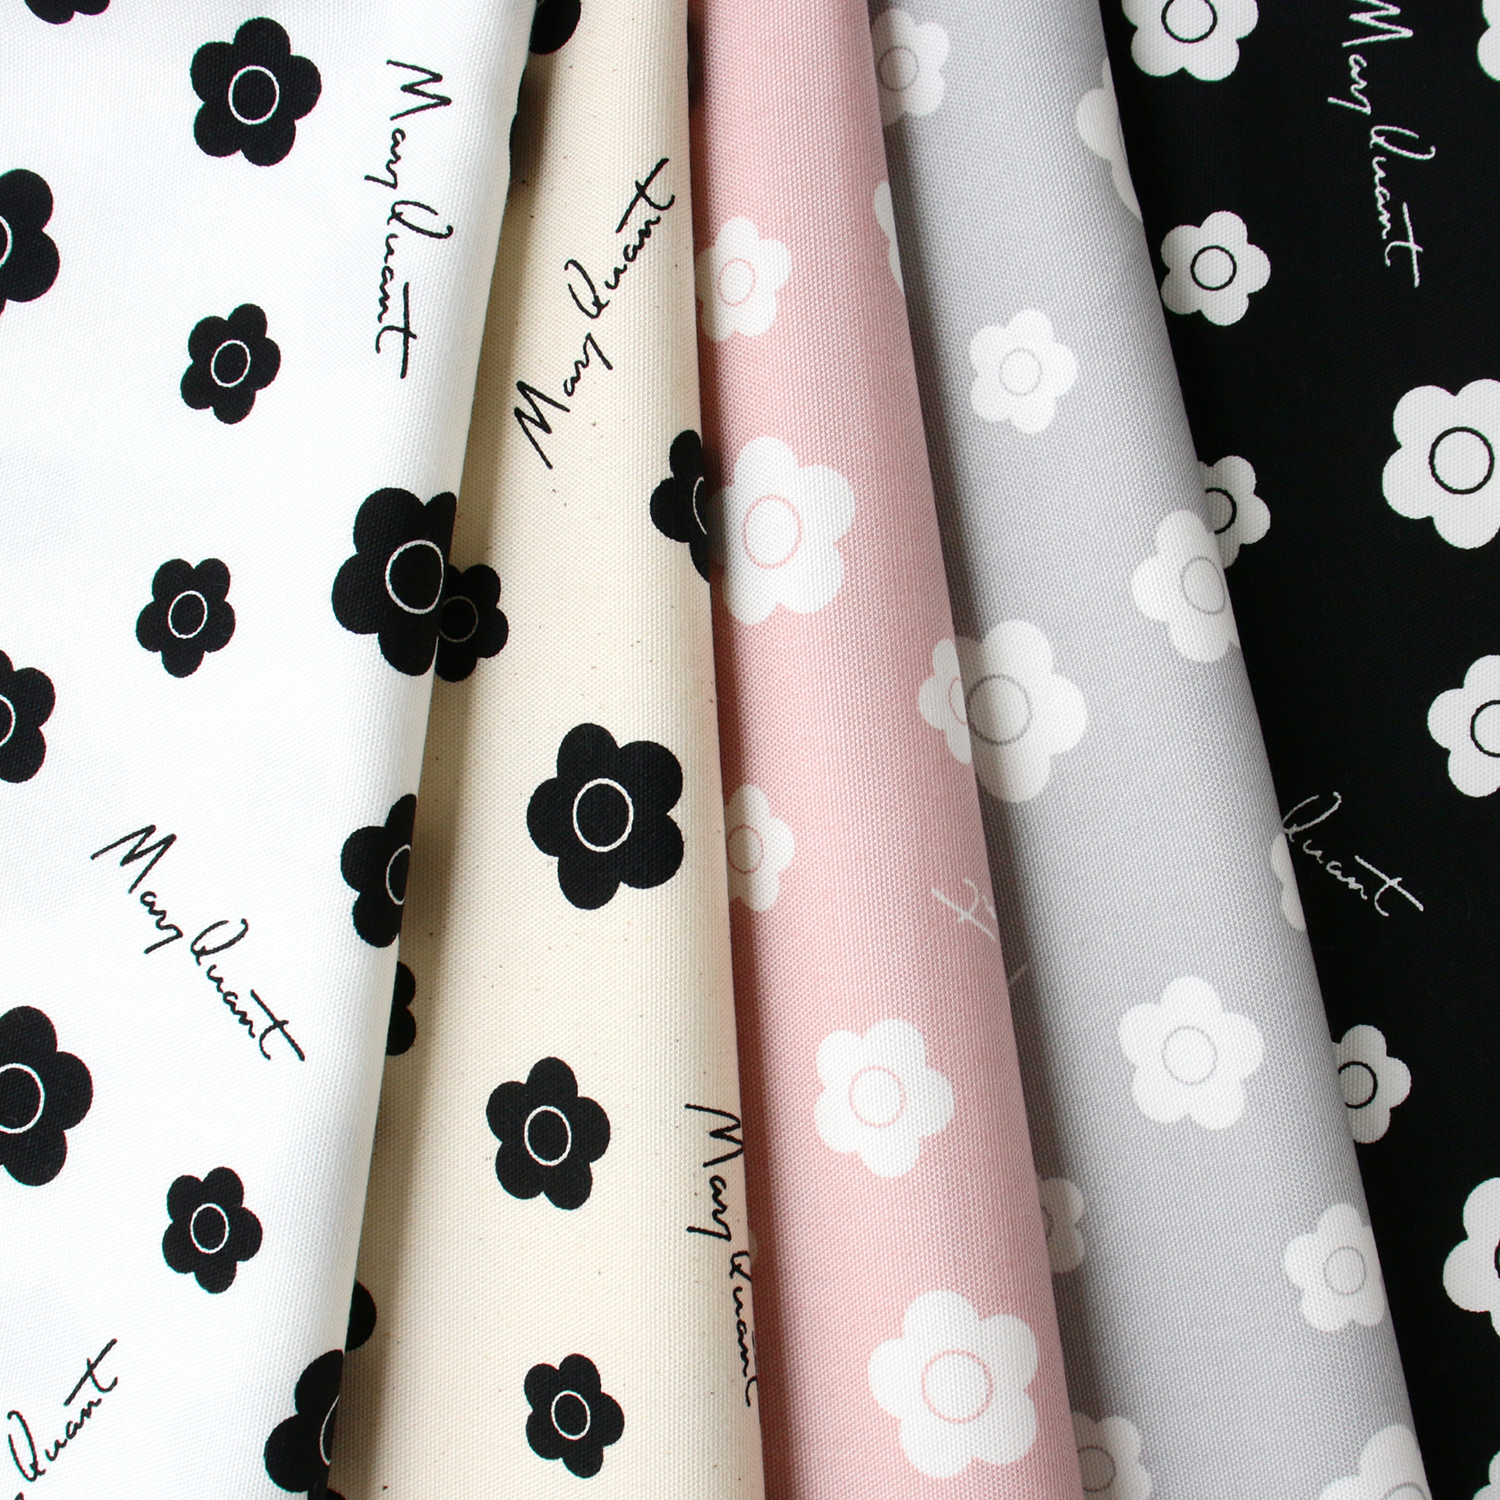 ■AP1020SR-1 MARY QUANT Small flower pattern Oxford cloth original fabric (roll)